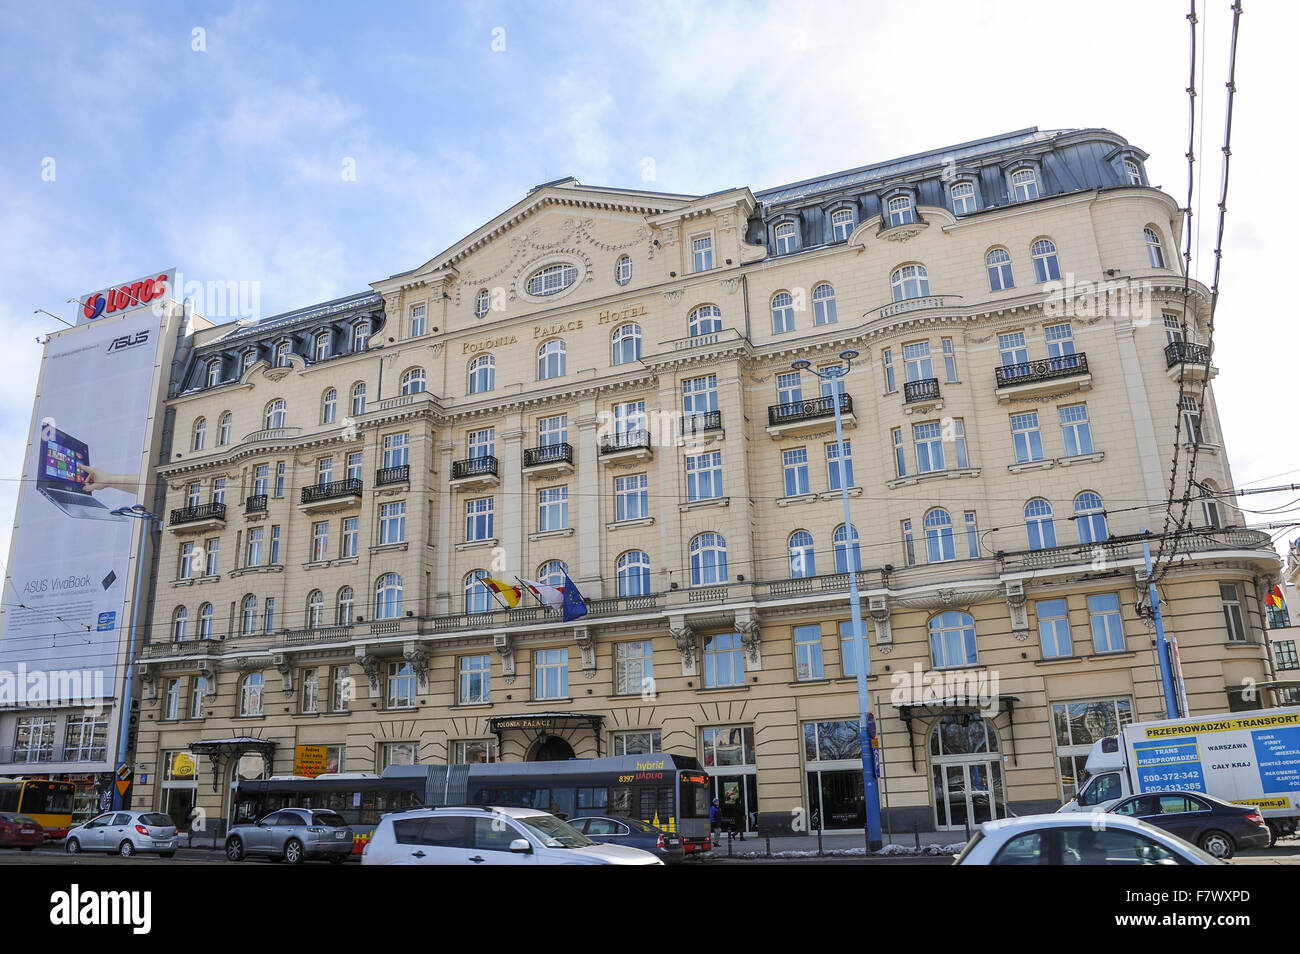 Polonia Palace Hotel, Warsaw, Poland Stock Photo